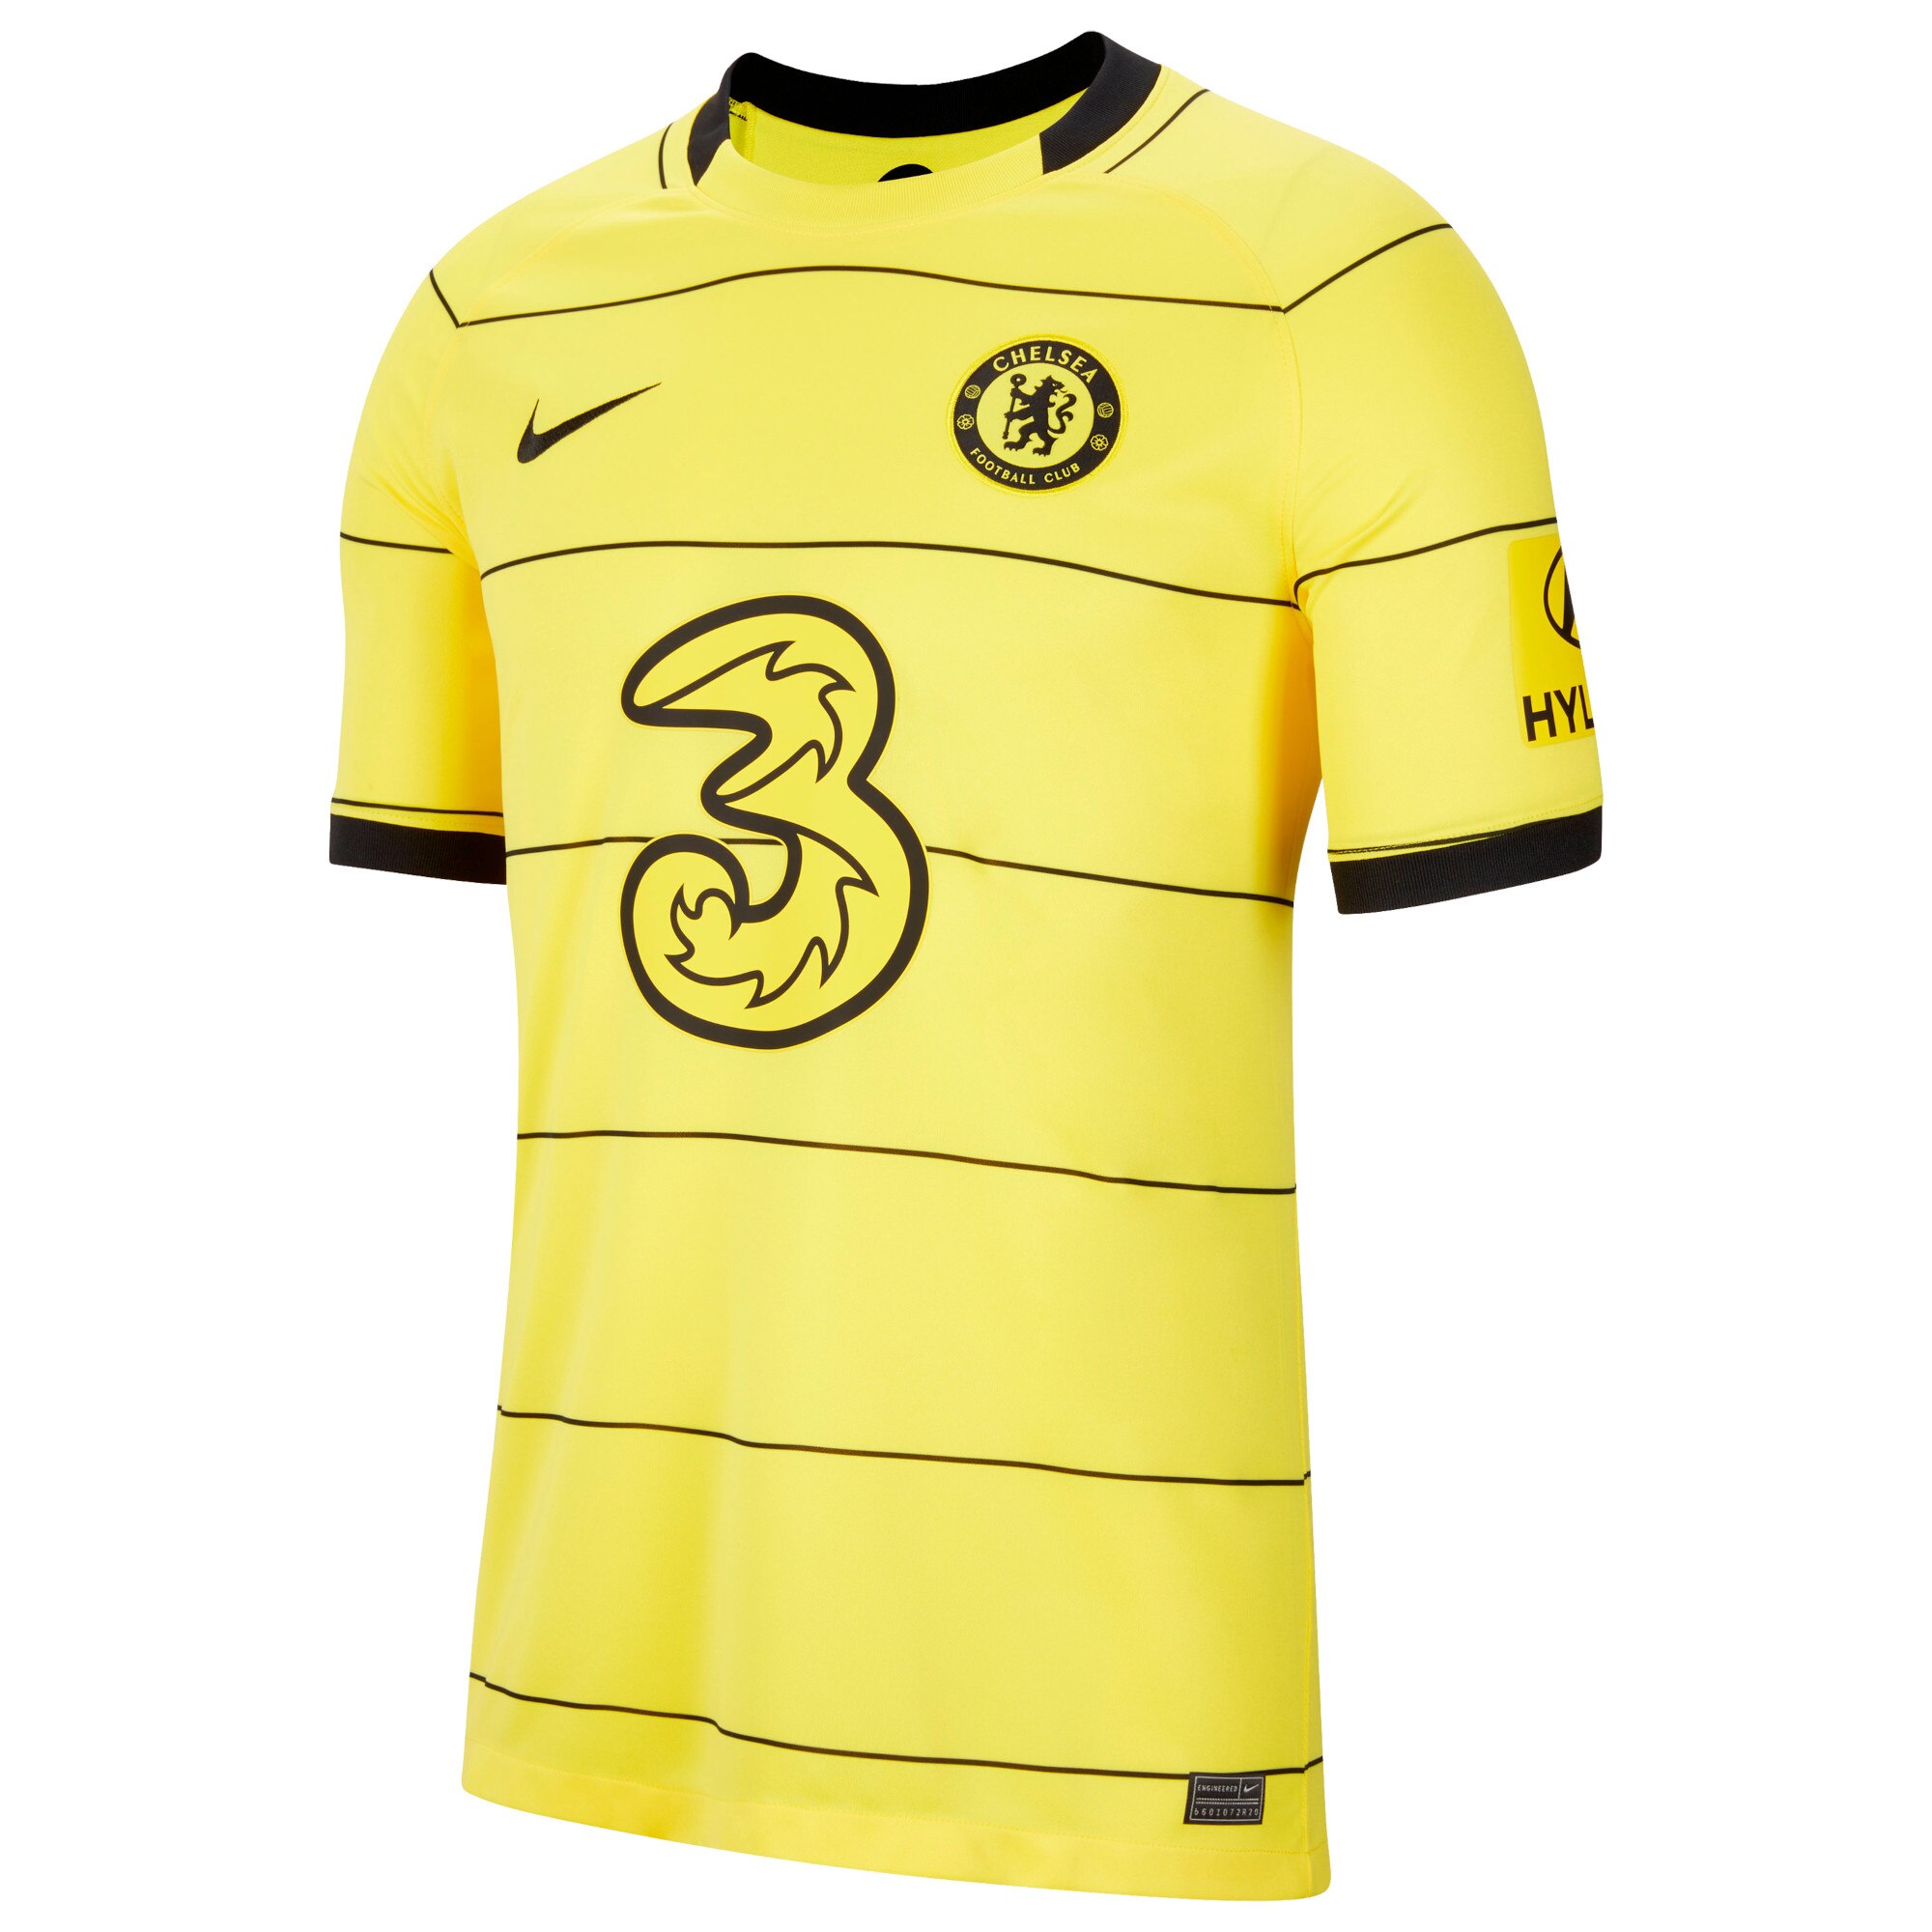 Chelsea Cup Away Stadium Shirt 2021-22 with Nouwen 3 printing